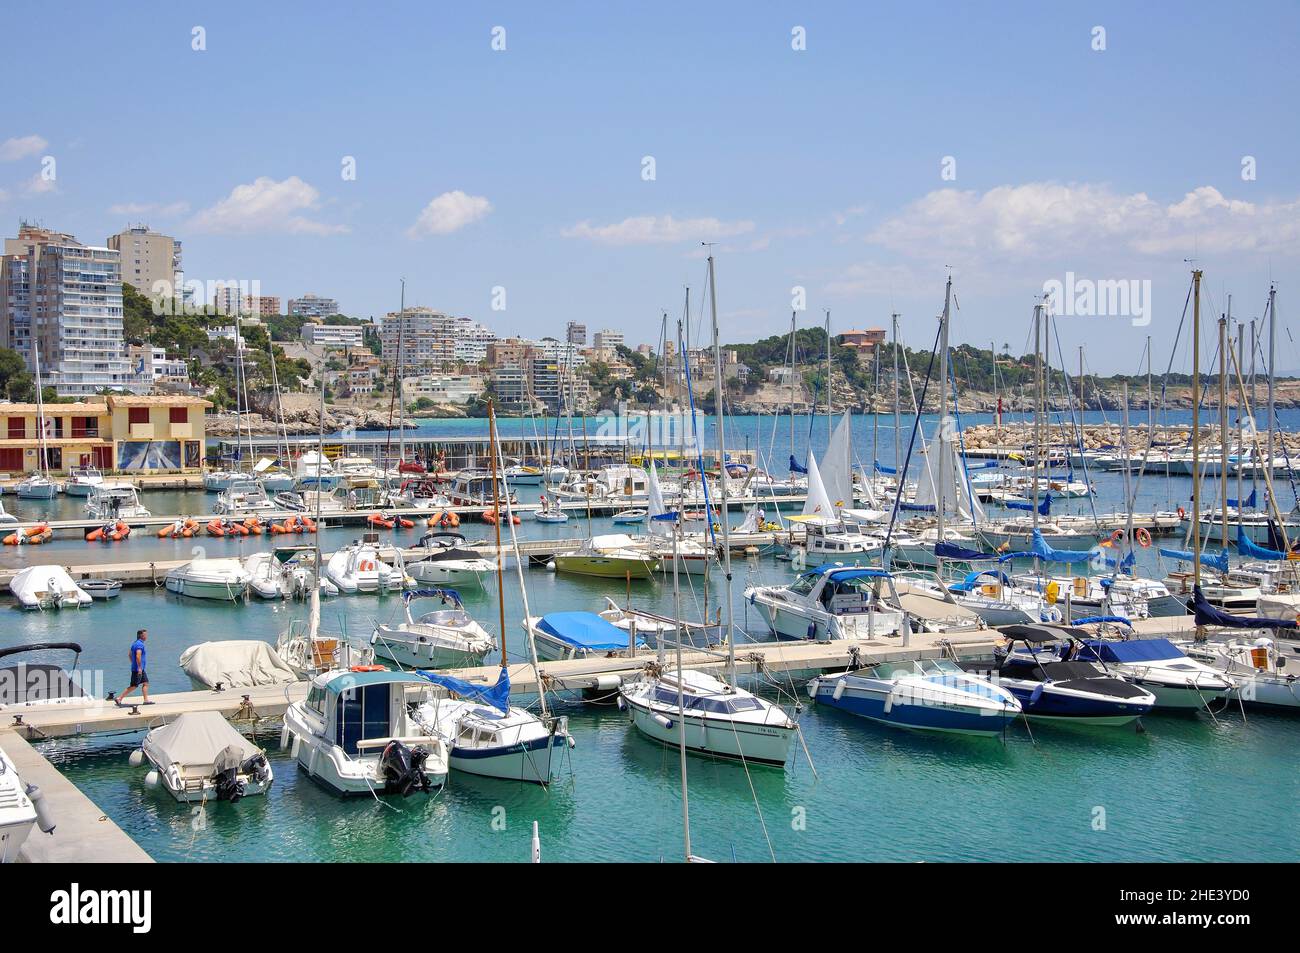 Marina view, Cala Major, comune di Palma, Maiorca (Mallorca), Isole Baleari, Spagna Foto Stock